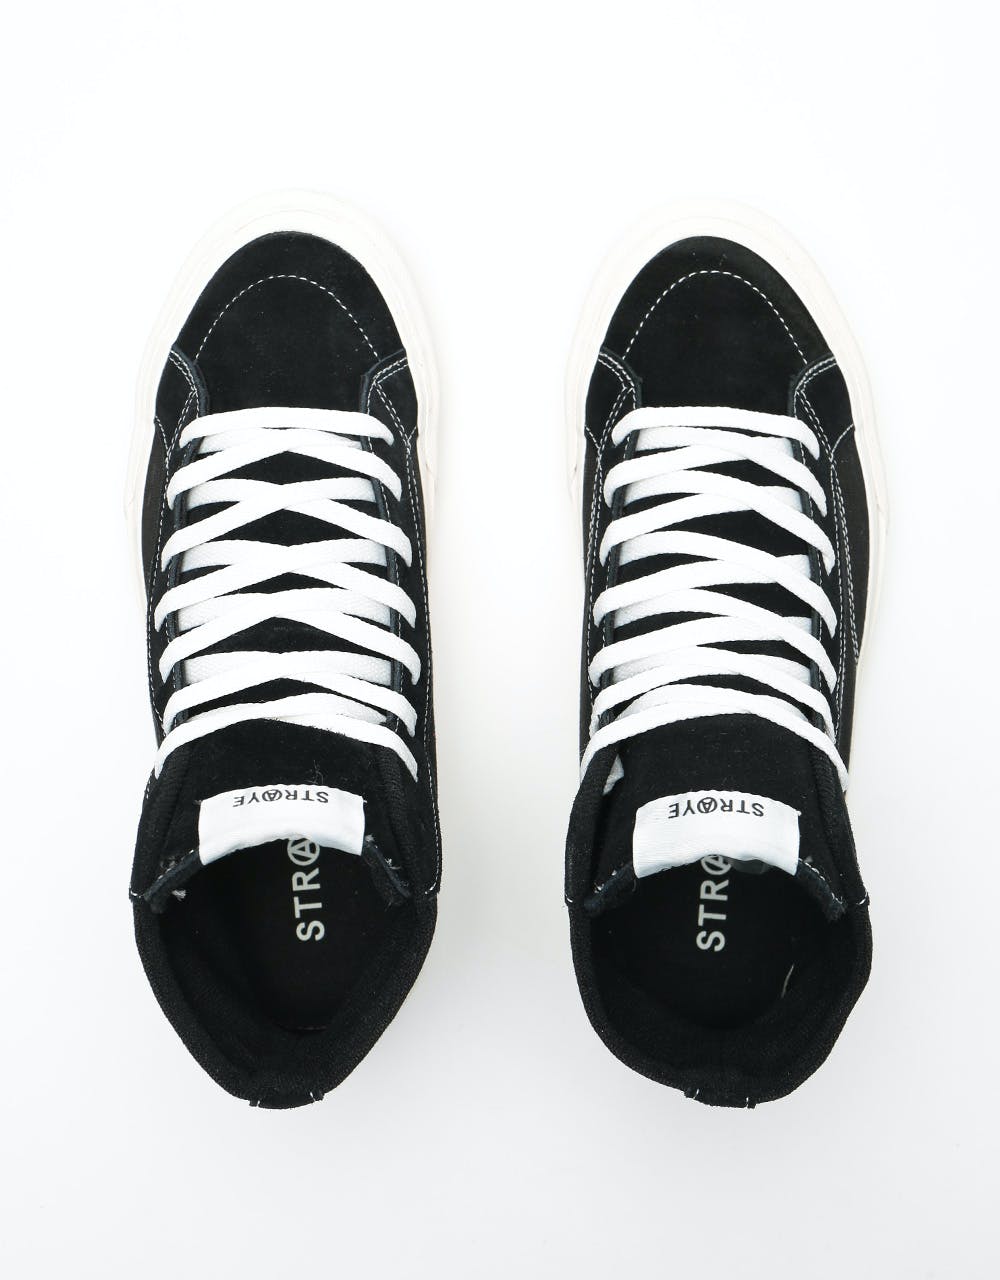 Straye Hiland Skate Shoes - FO Black